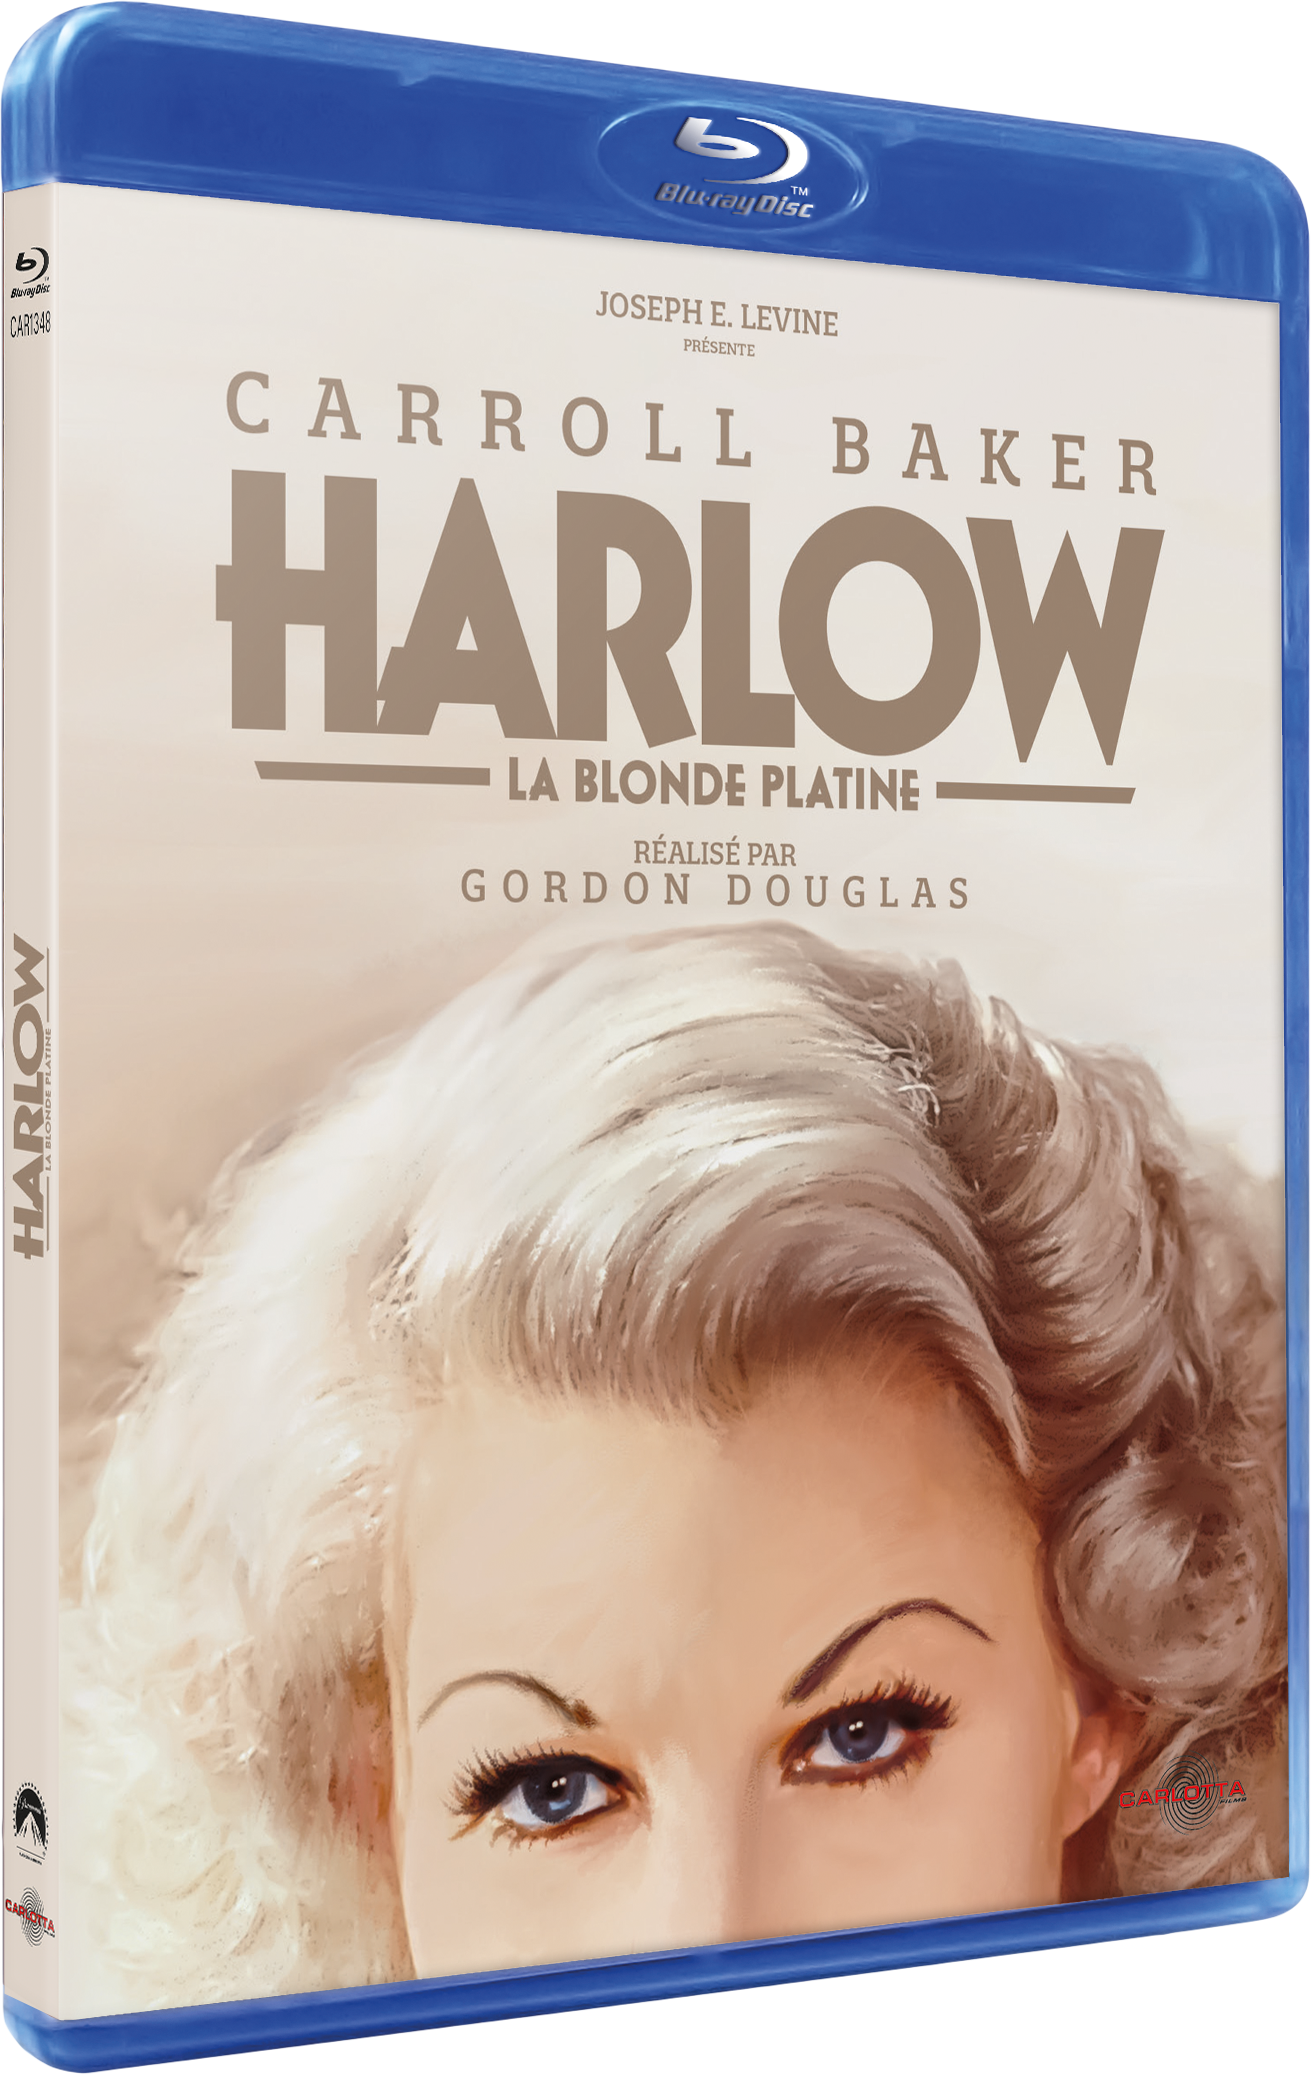 Harlow, Gordon Douglas' platinum blonde